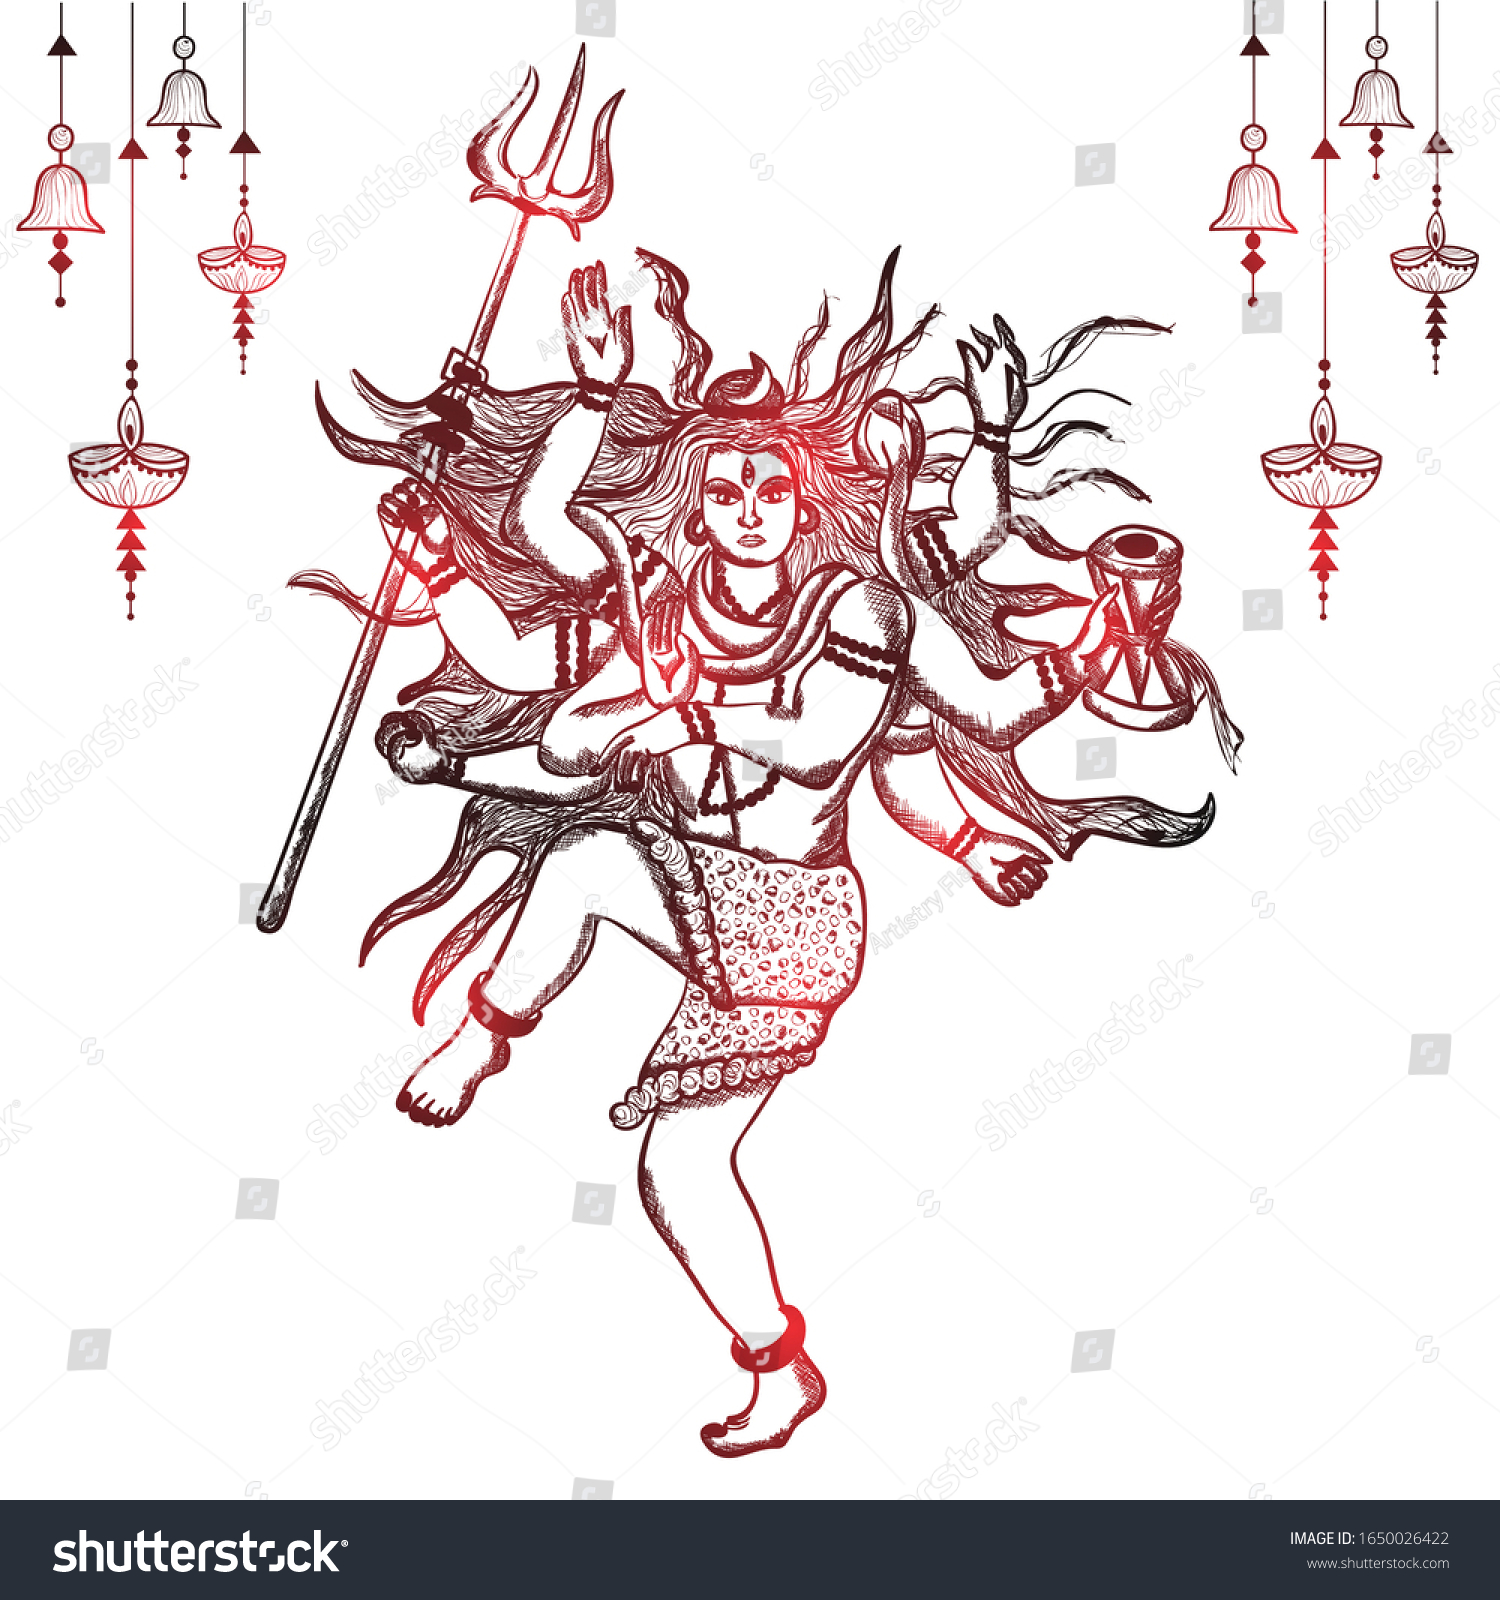 SVG of Hand drawn illustration of lord shiva in hindu mythology with red shine . Sketch of Lord shiva in Natraj dance for shivratri or mahashivratri. svg